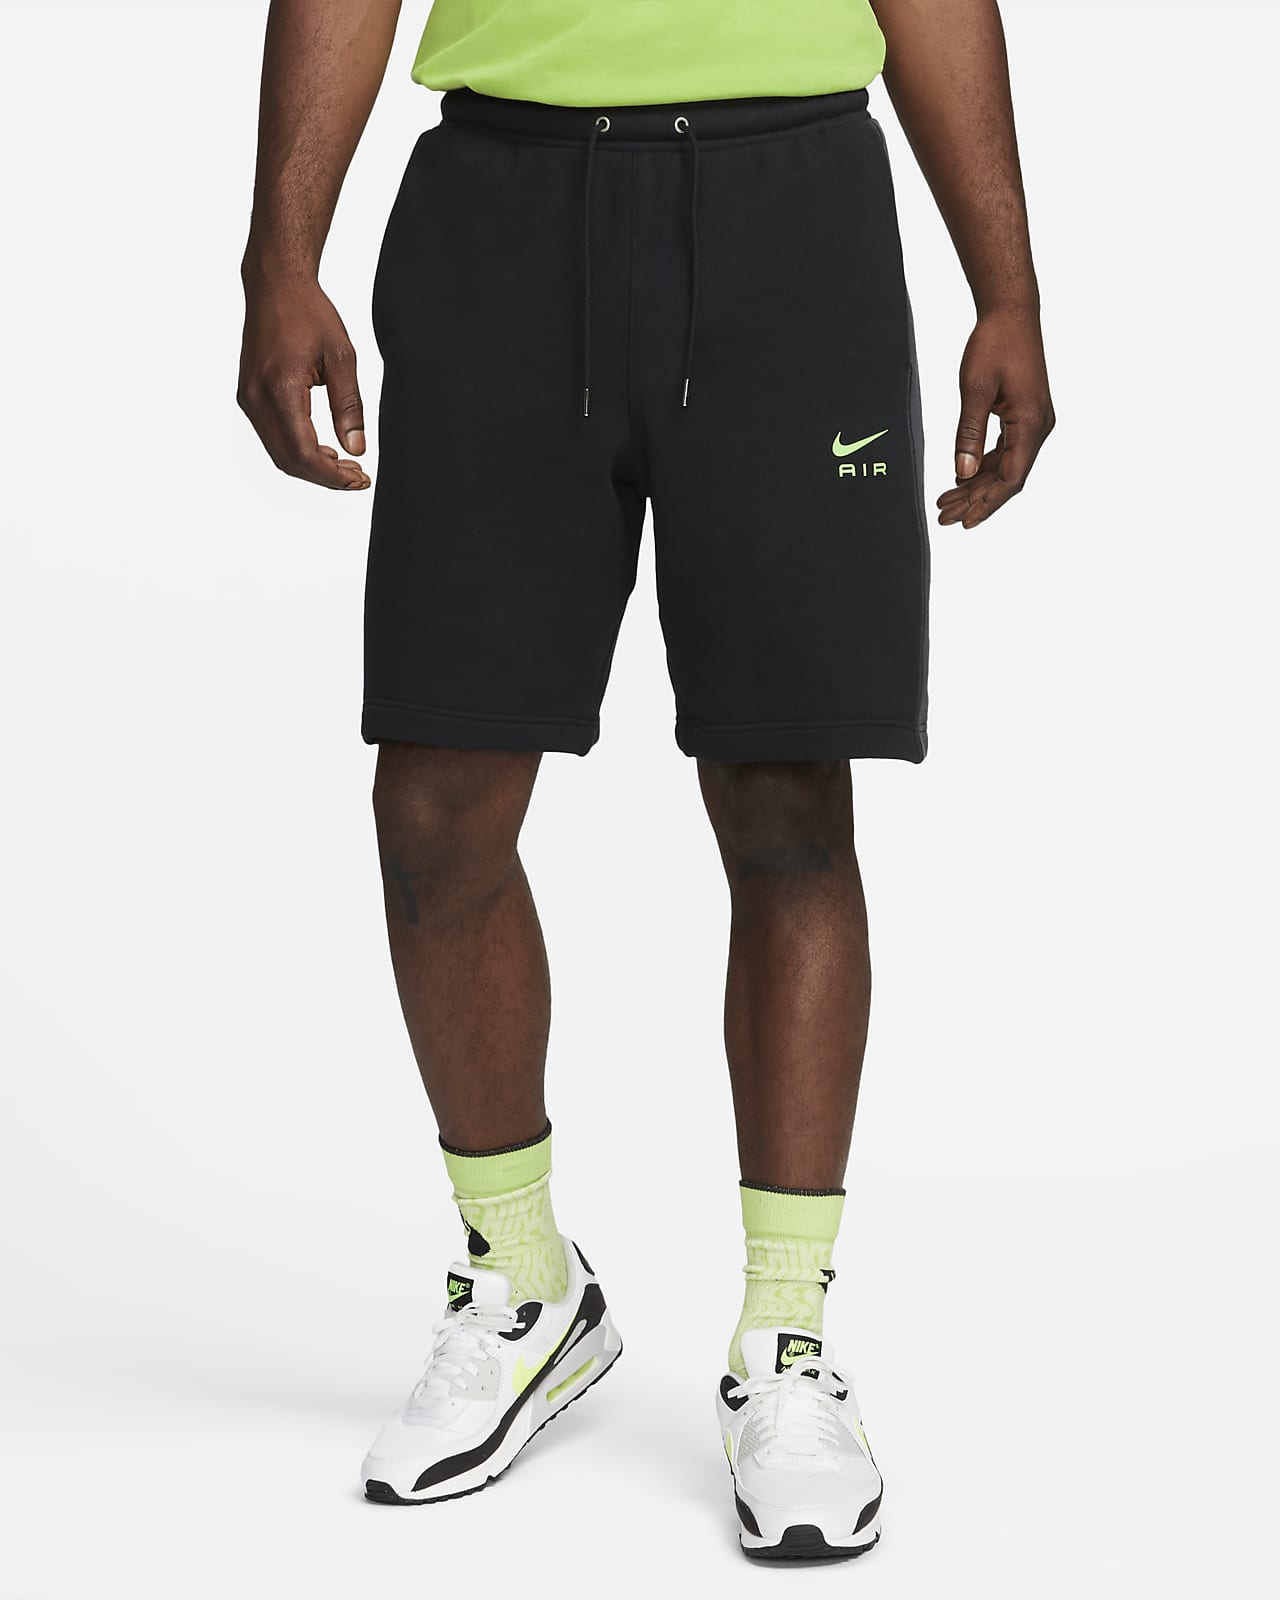 Nike Sportswear Air Herrenshorts aus French Terry